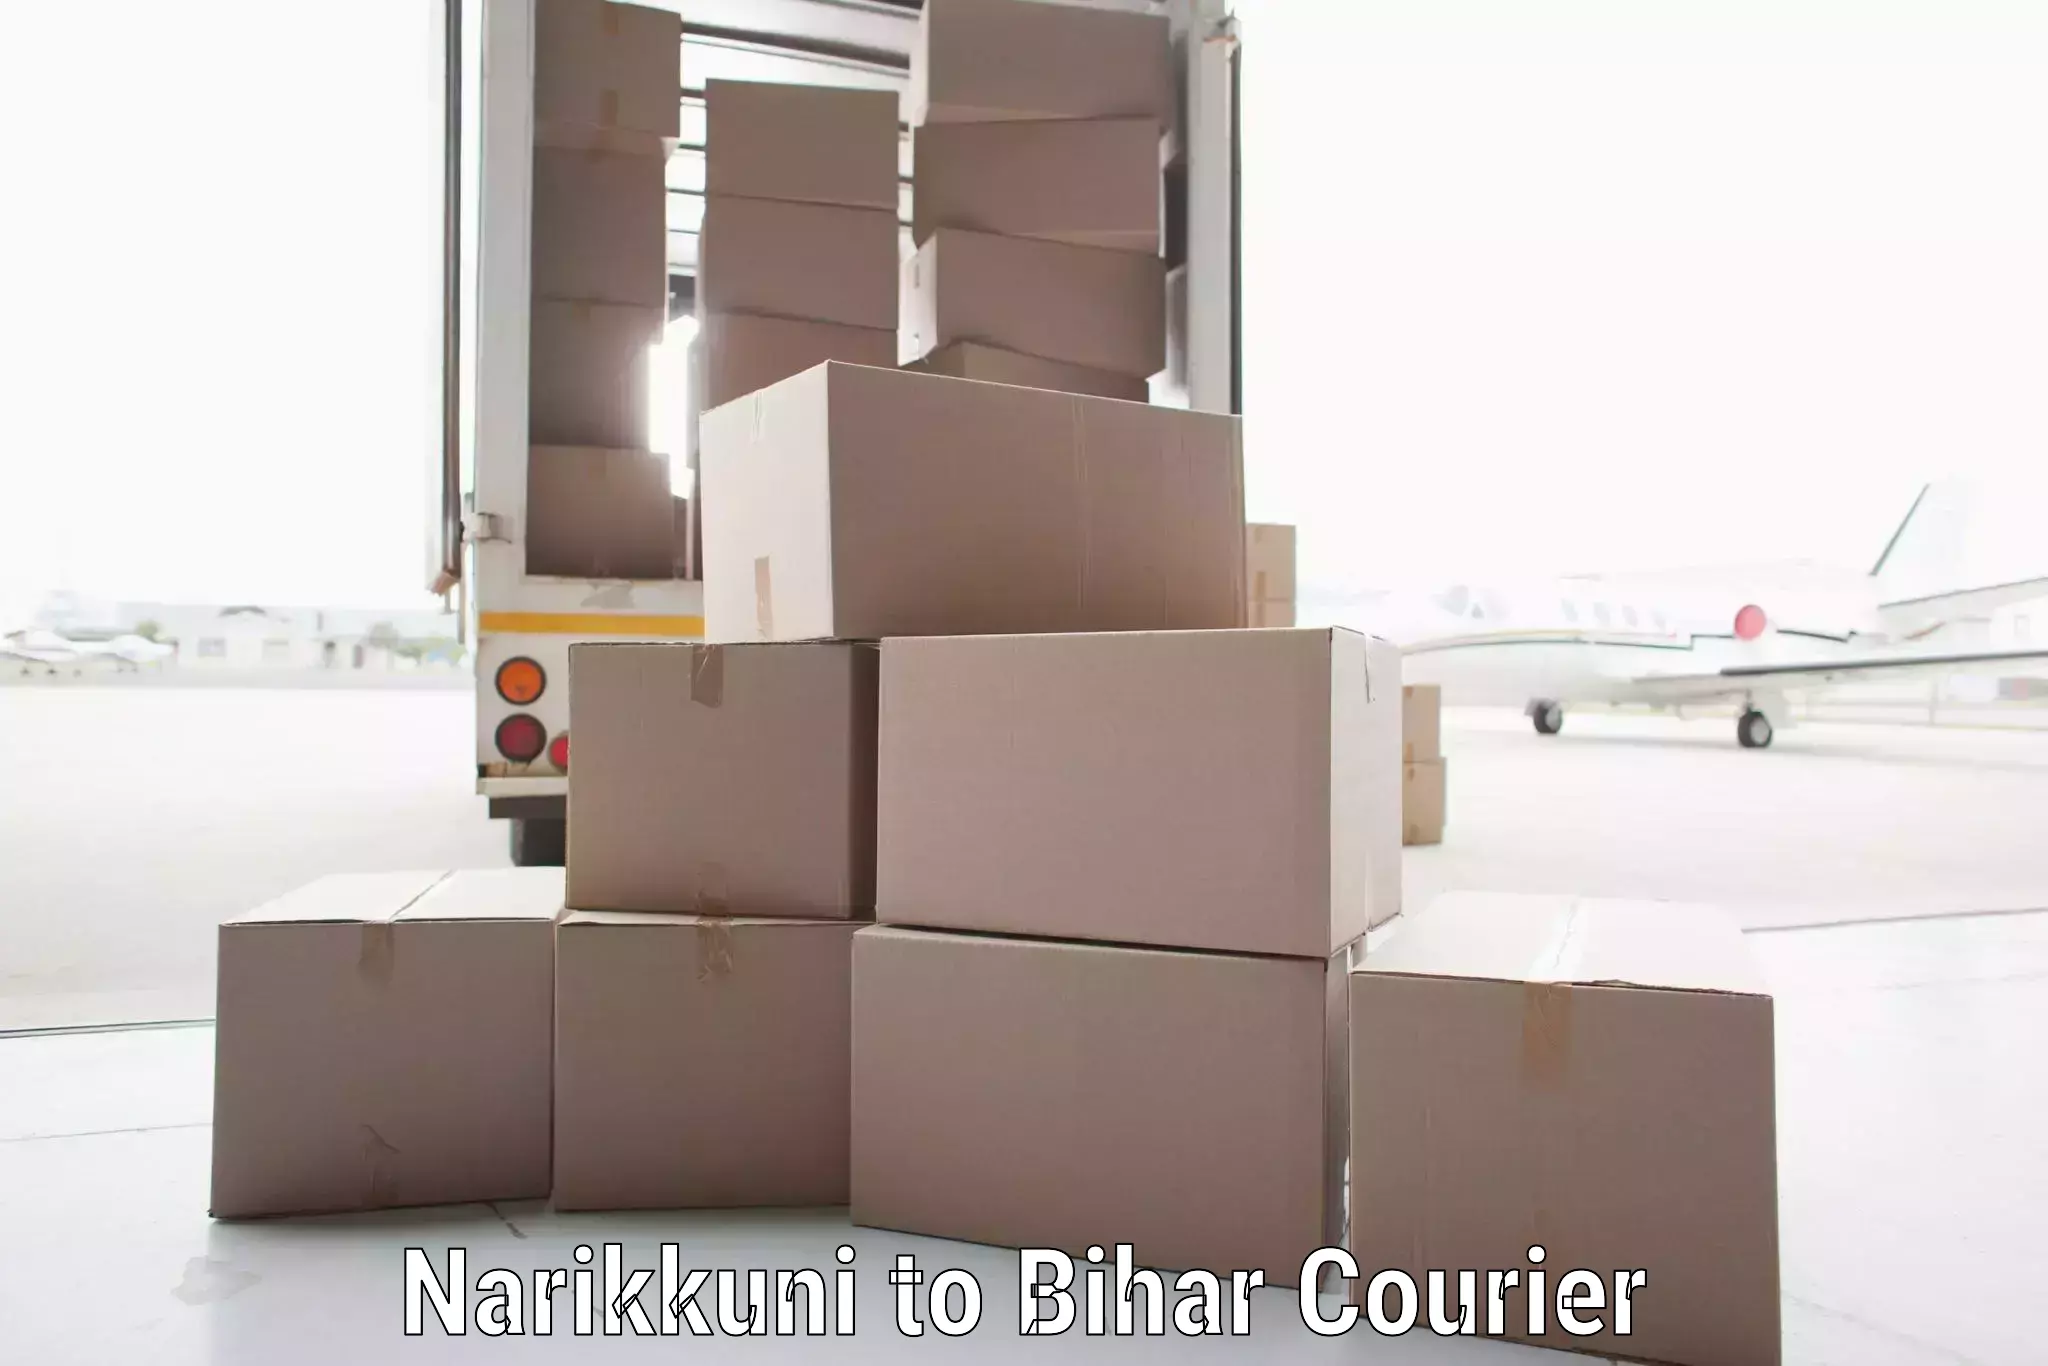 Residential courier service Narikkuni to Sheonar